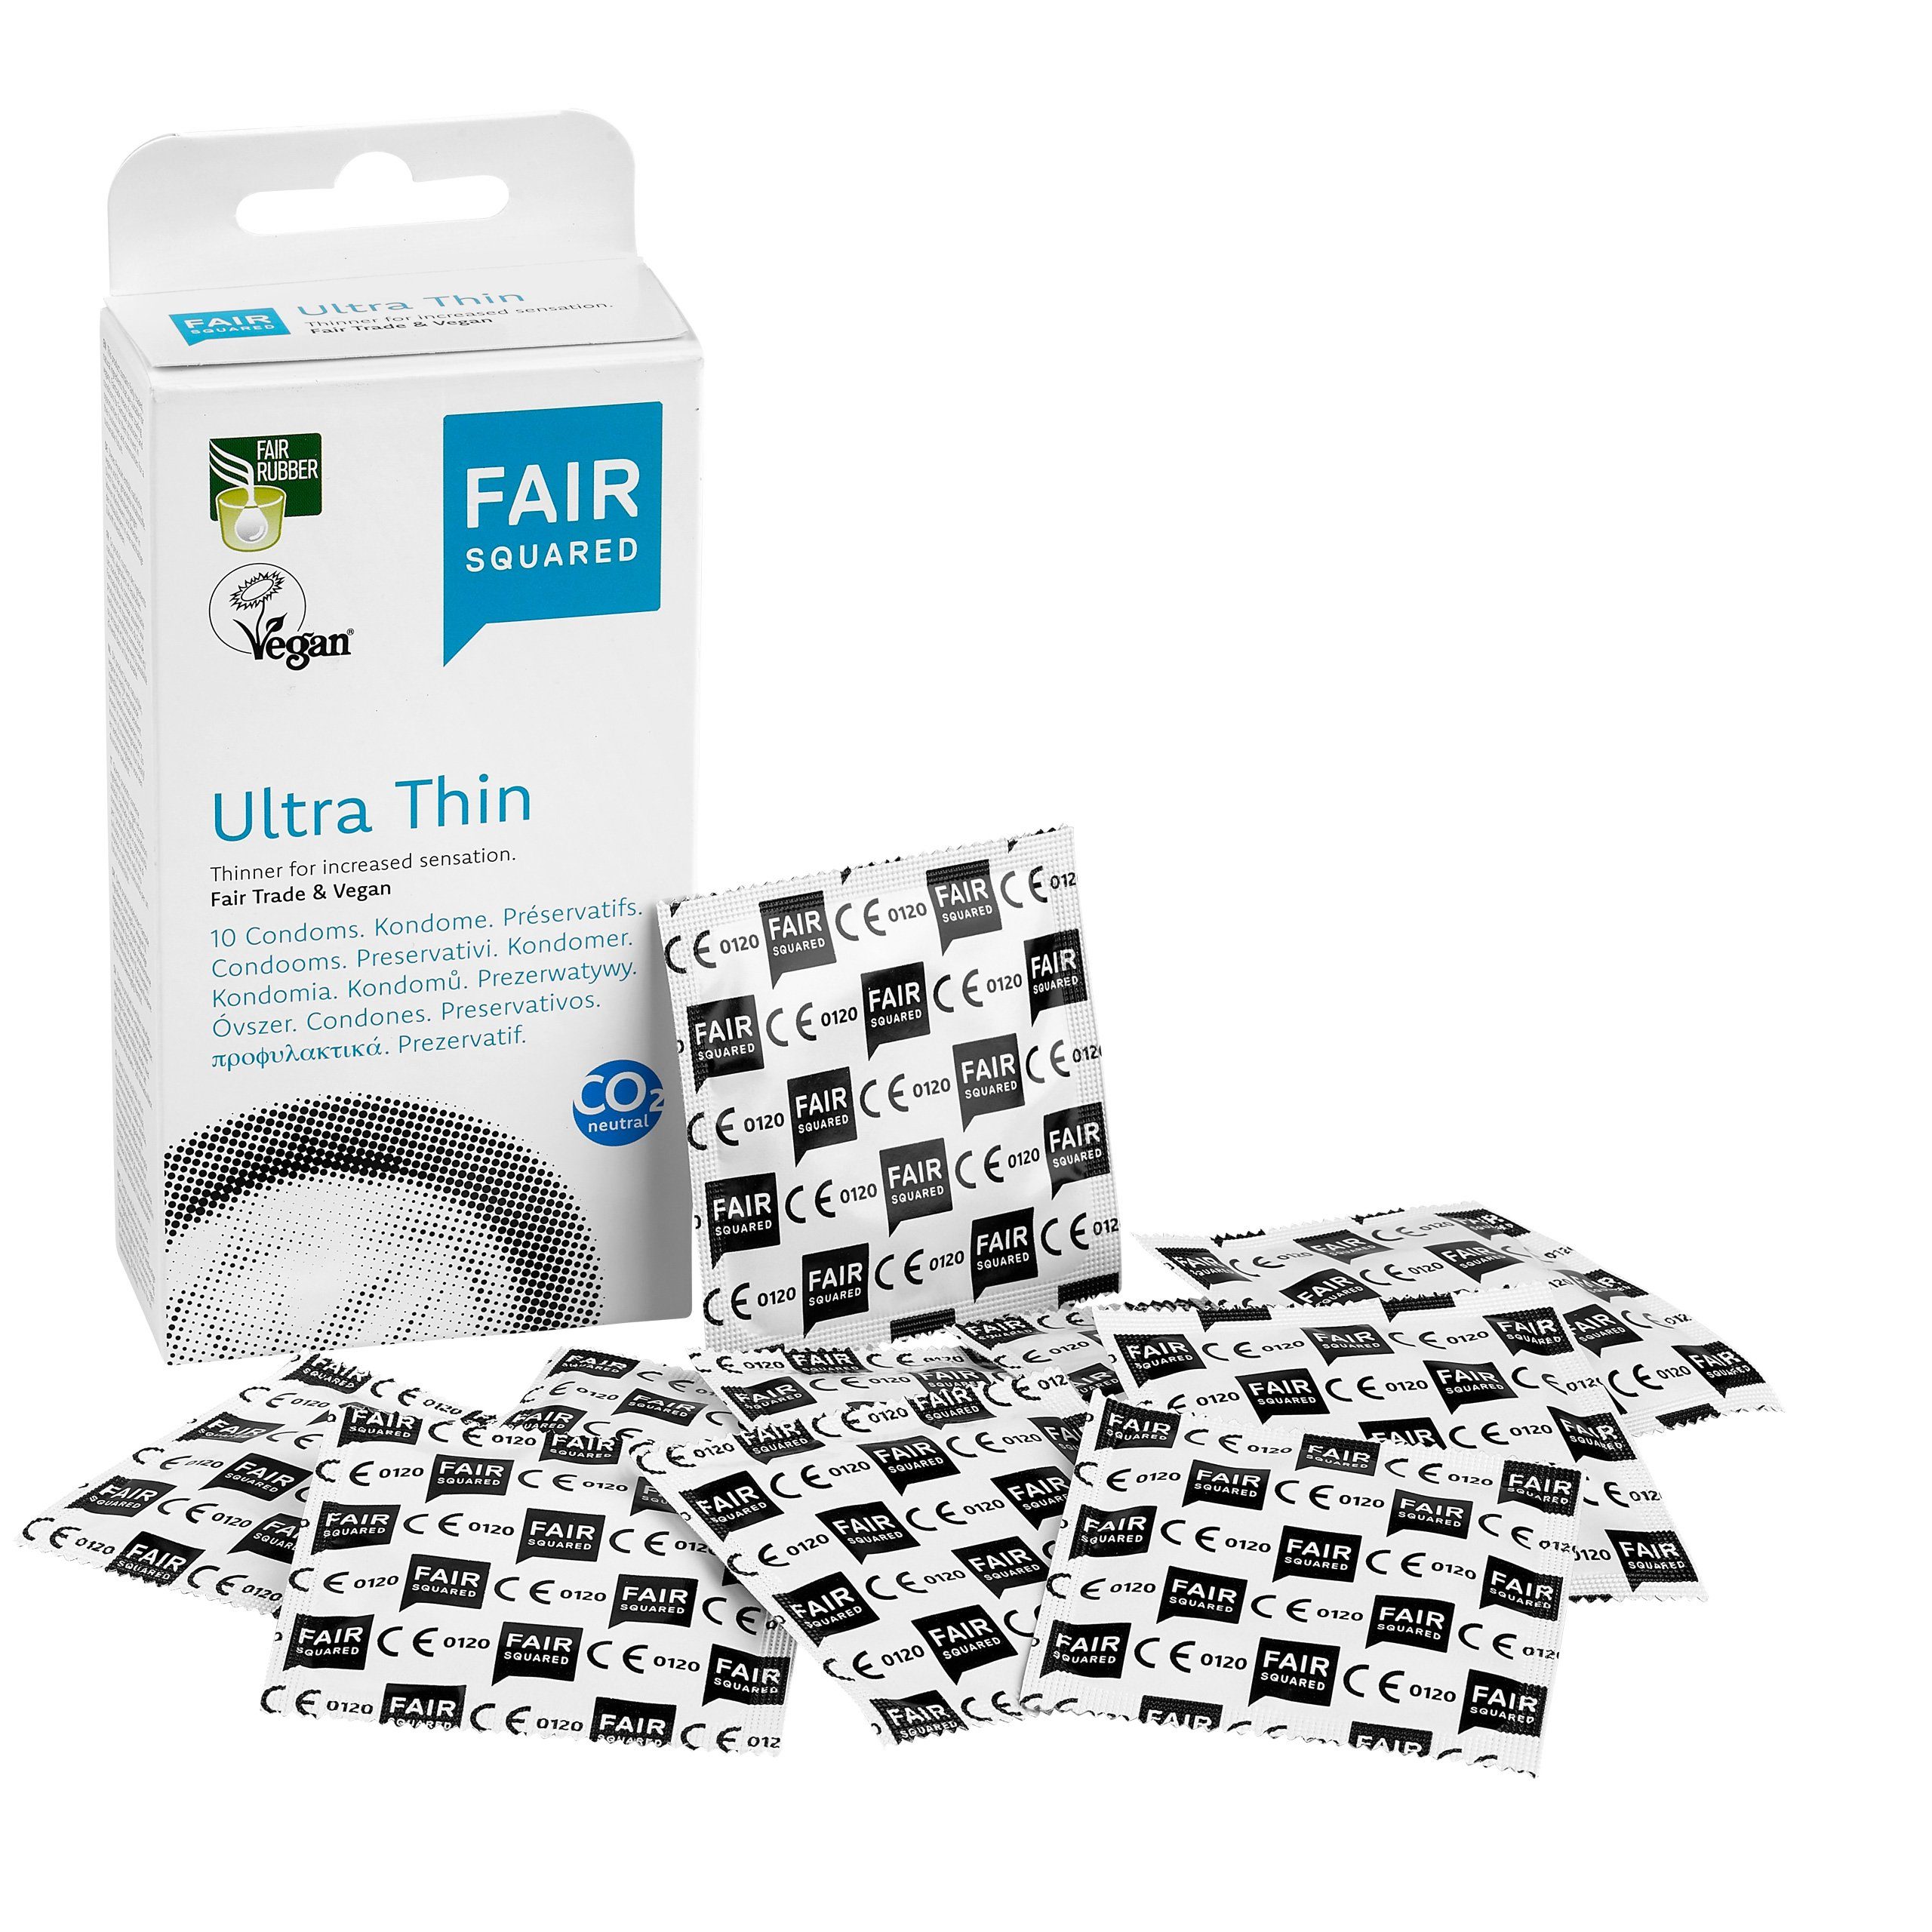 Fair Squared Kondome FAIR SQUARED Ultra thin Kondome 100 Box – Vegane Kondome 100er aus fair gehandeltem Naturkautschuk